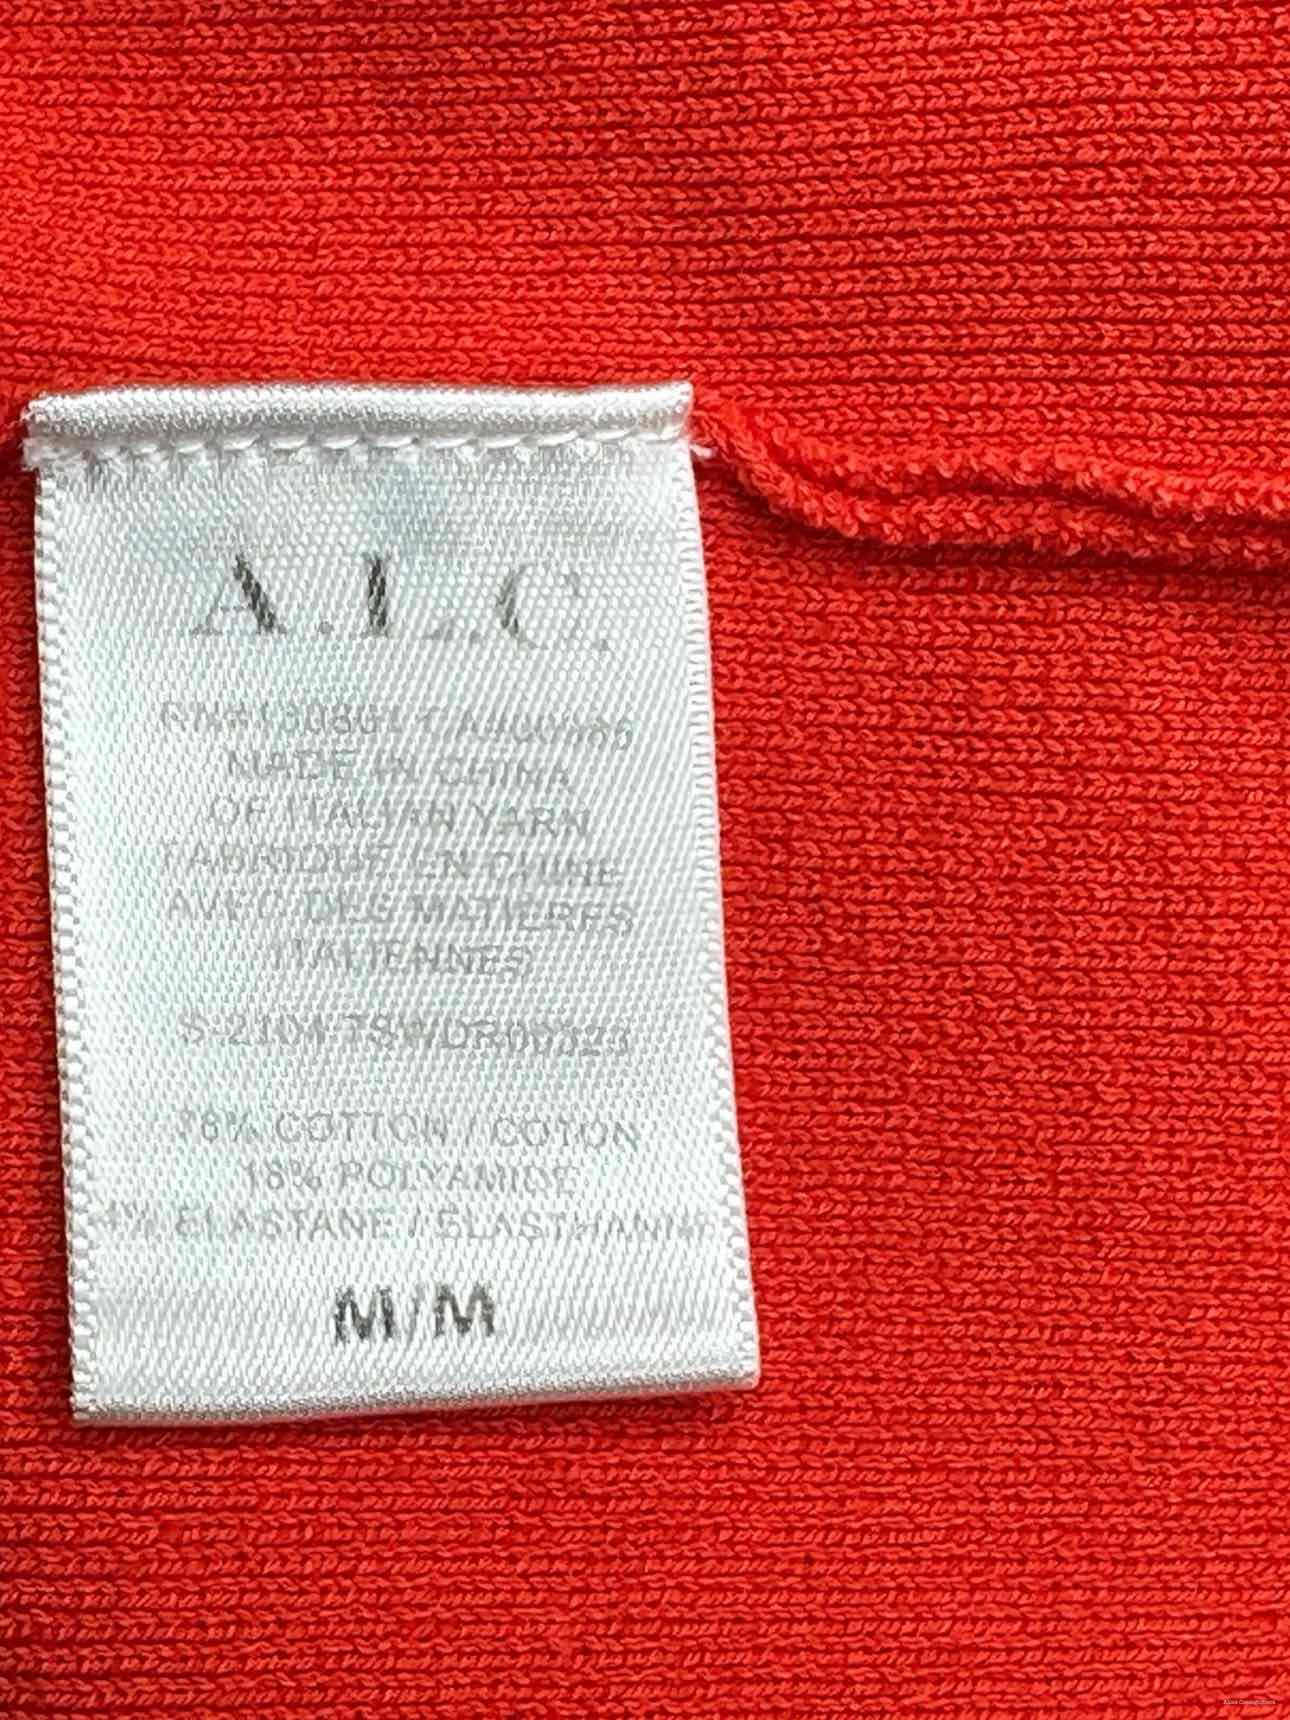 A.L.C Orange Cotton Blend Knit Dress Size M